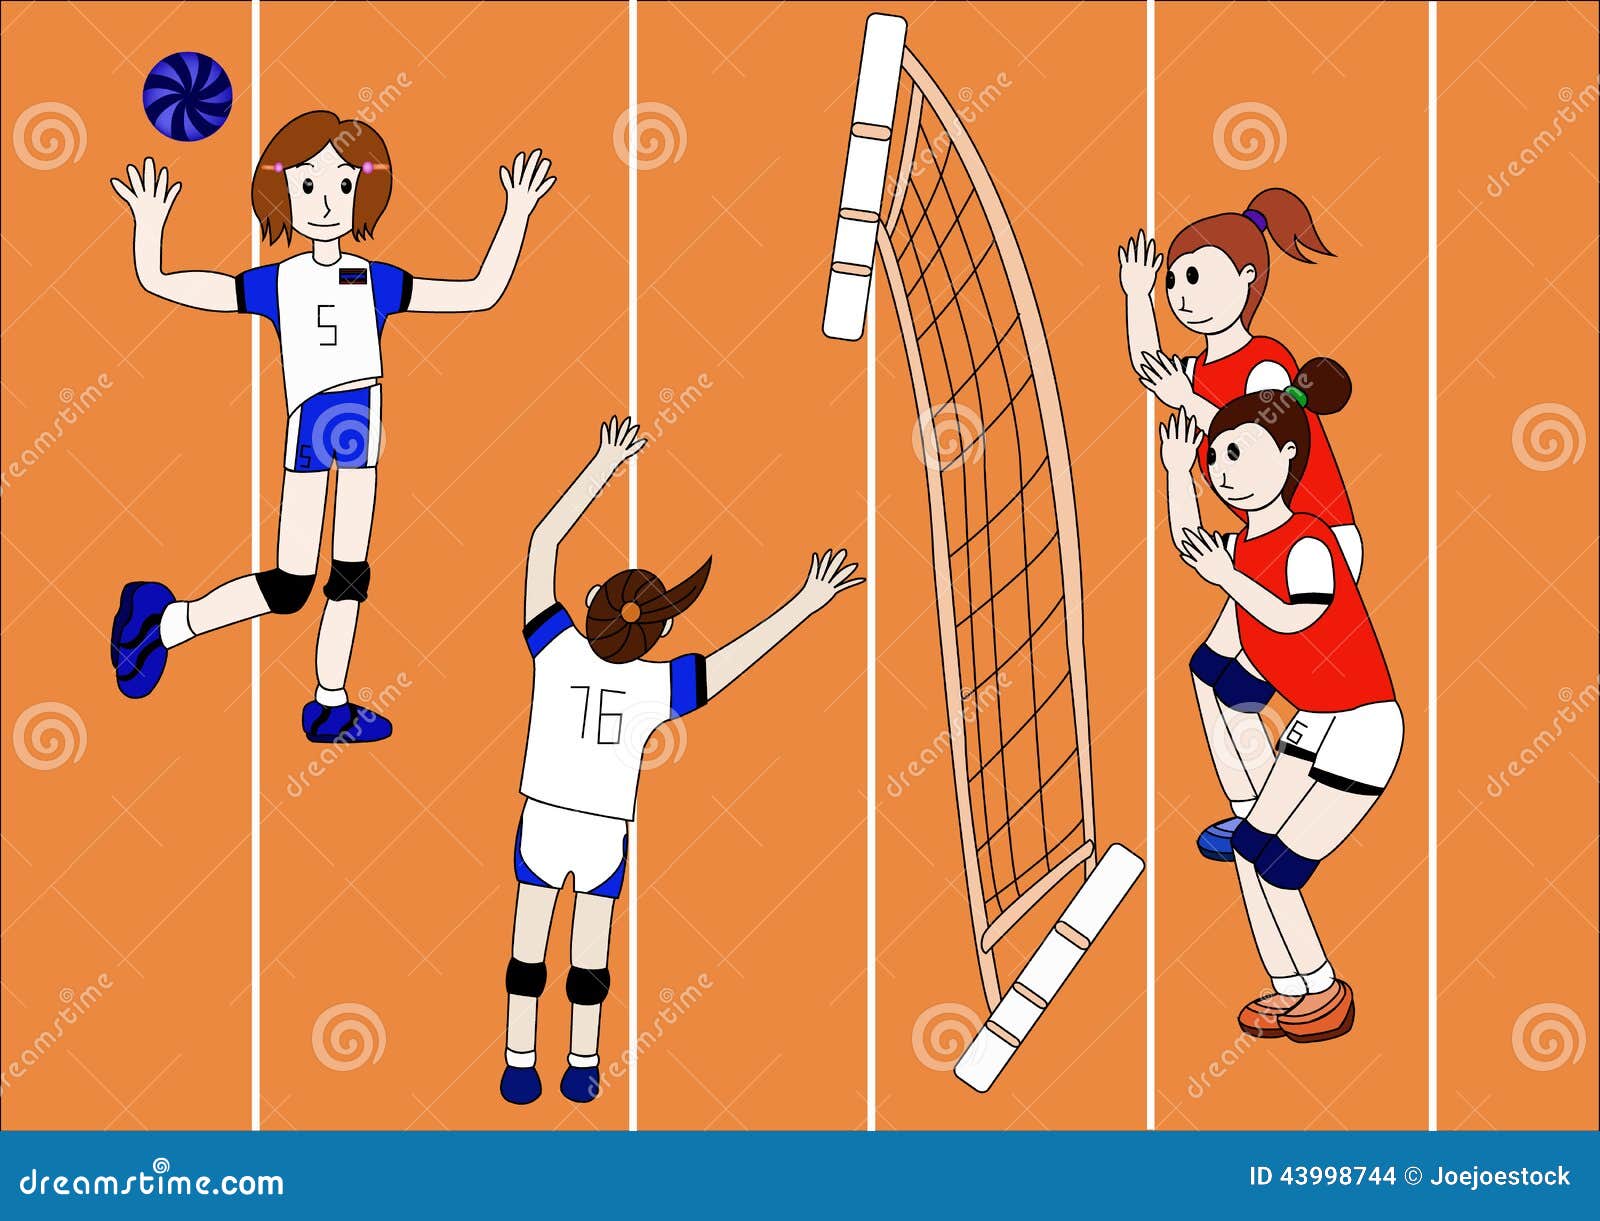 The Vector of Volleyball Team Stock Illustration - Illustration of team ...